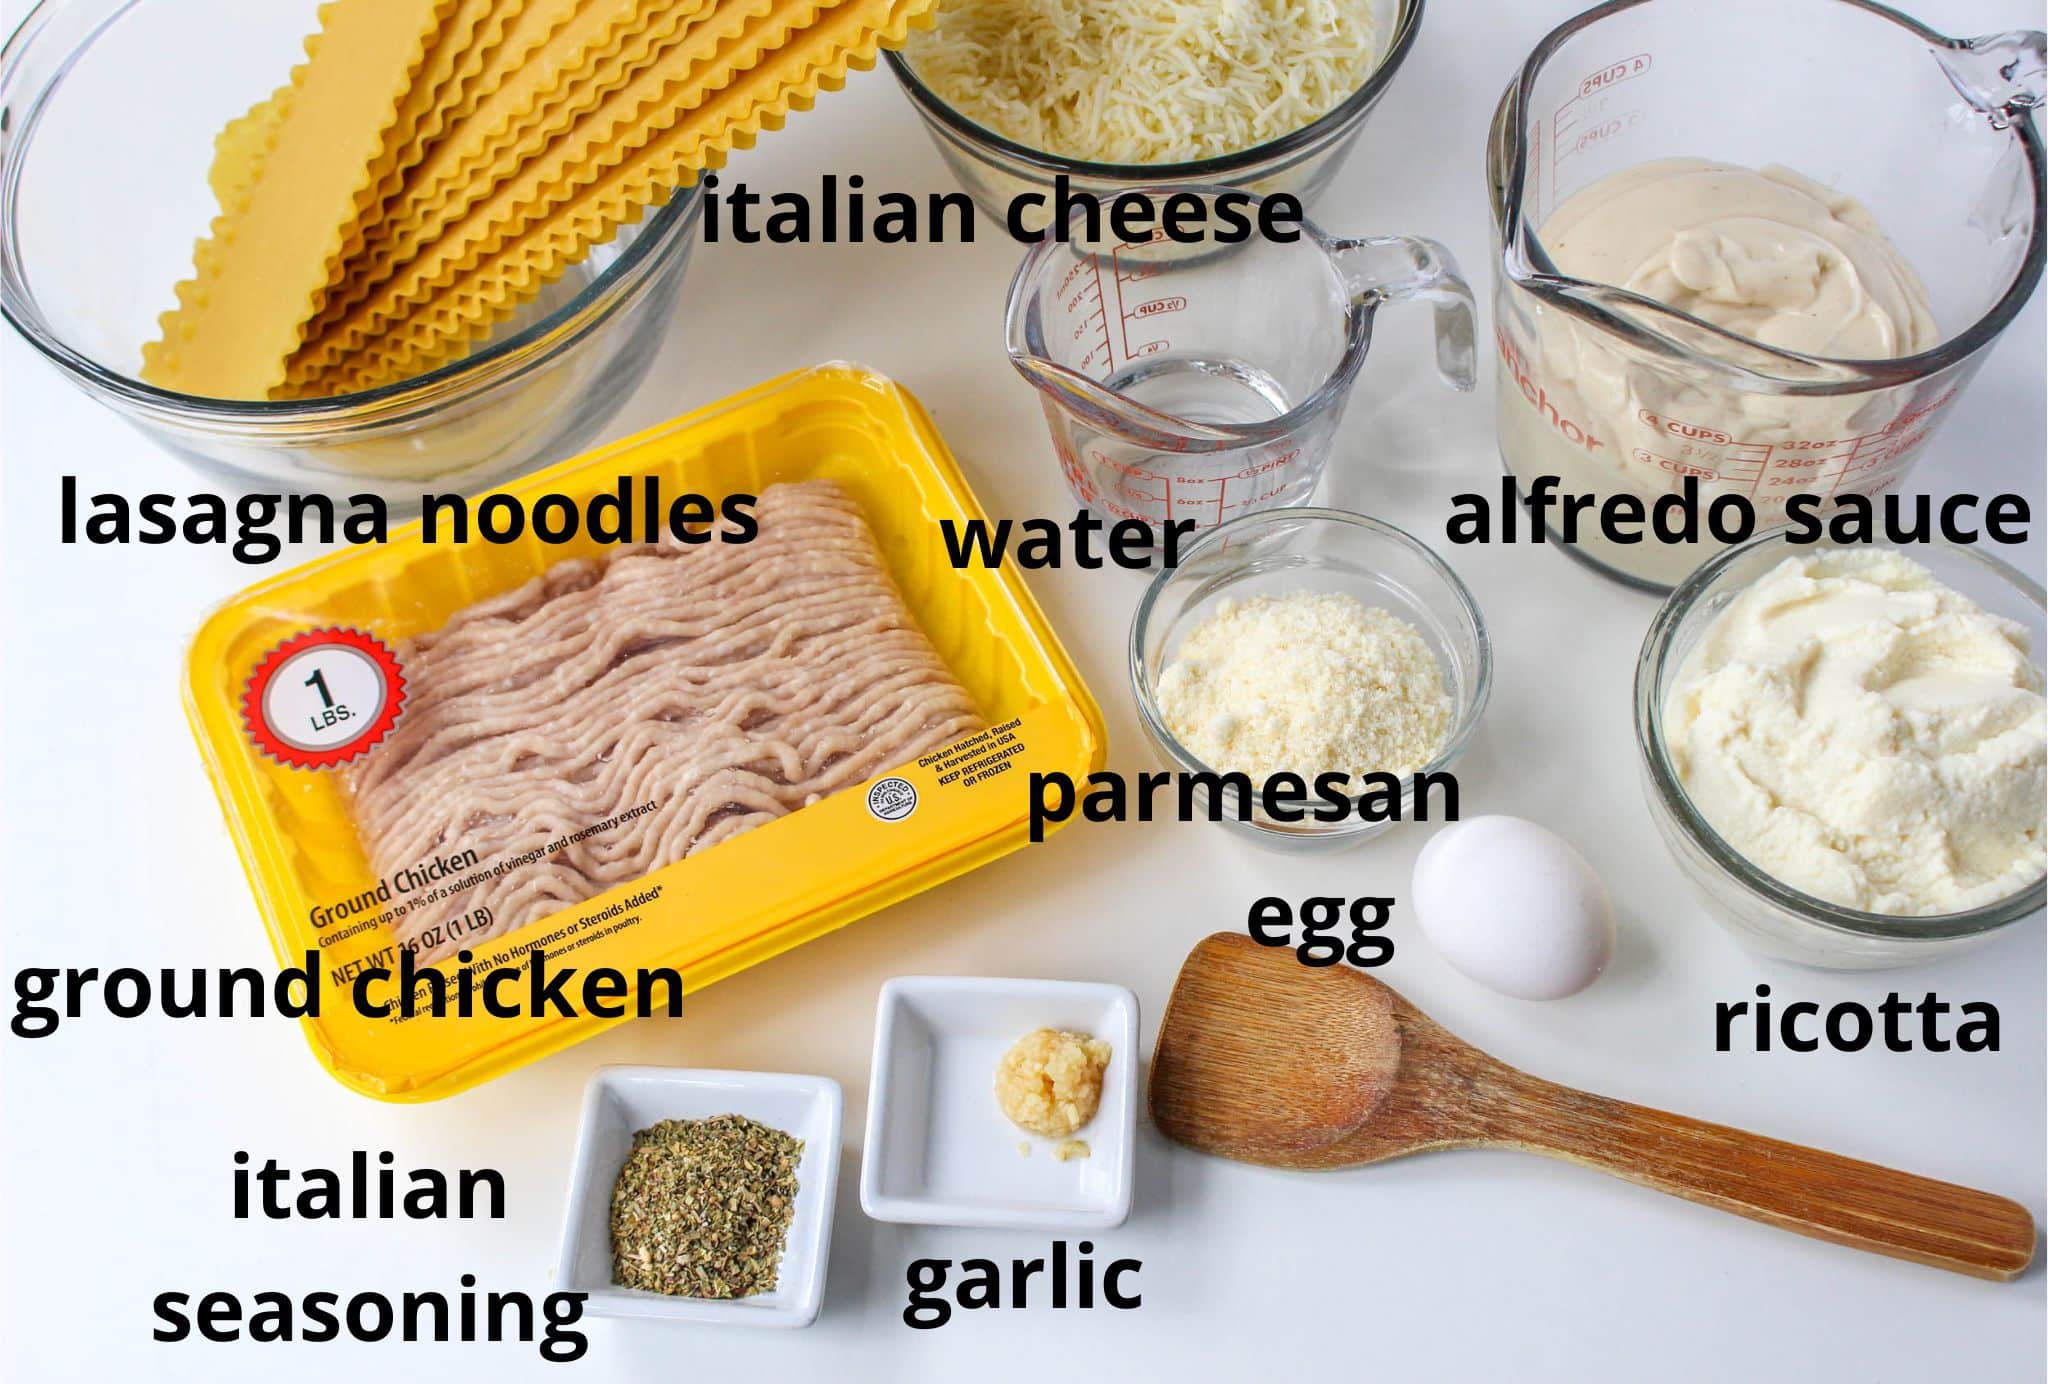 italian cheese, alfredo sauce, lasagna noodles, ground chicken, water, parmesan, egg, ricotta, italian seasoning, and garlic on a white table